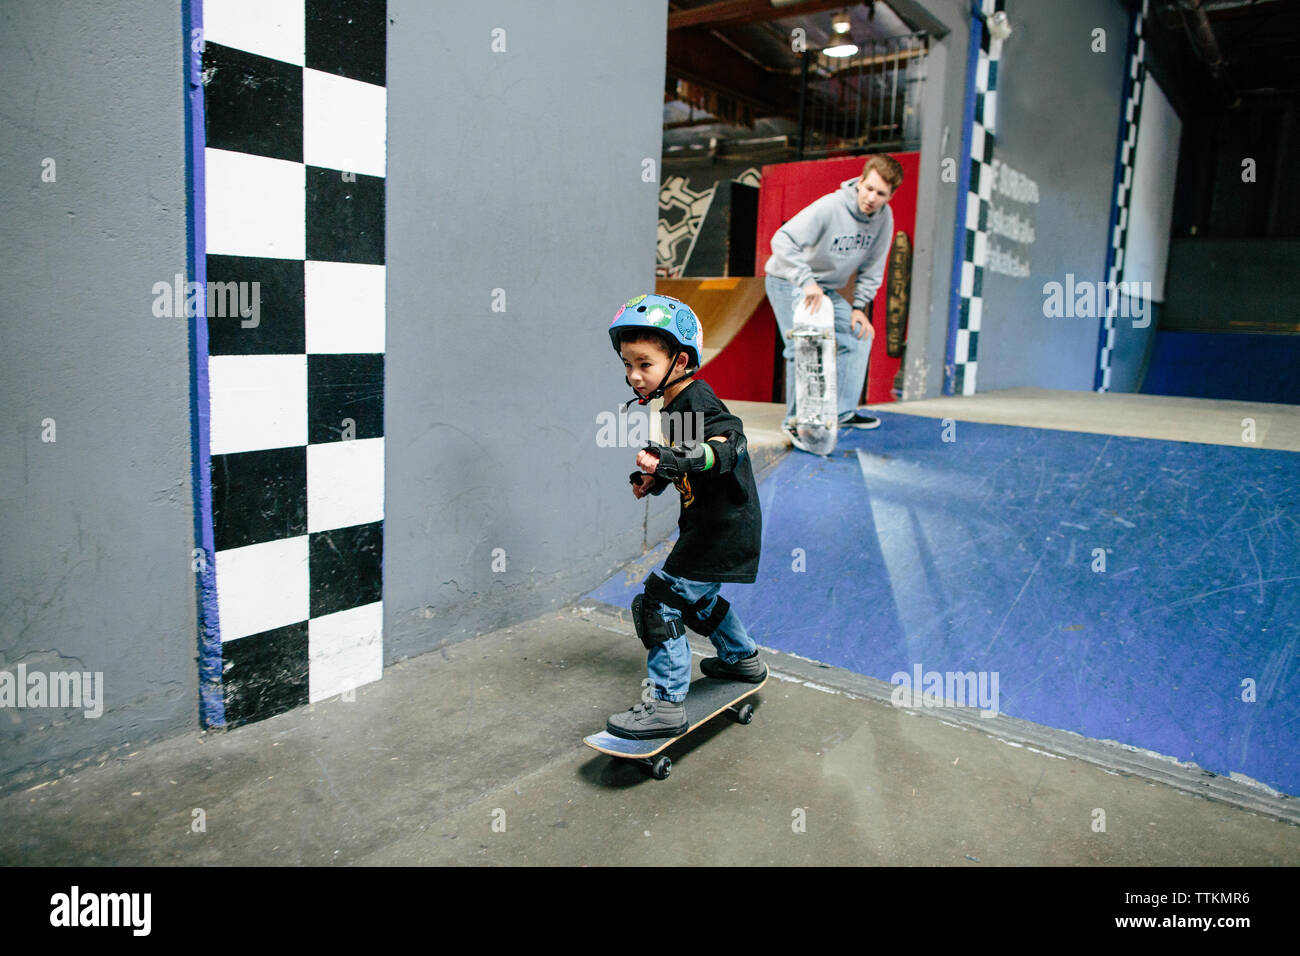 Skater kid parece enfocarse después de bajar la rampa de patinaje, instructor relojes Foto de stock